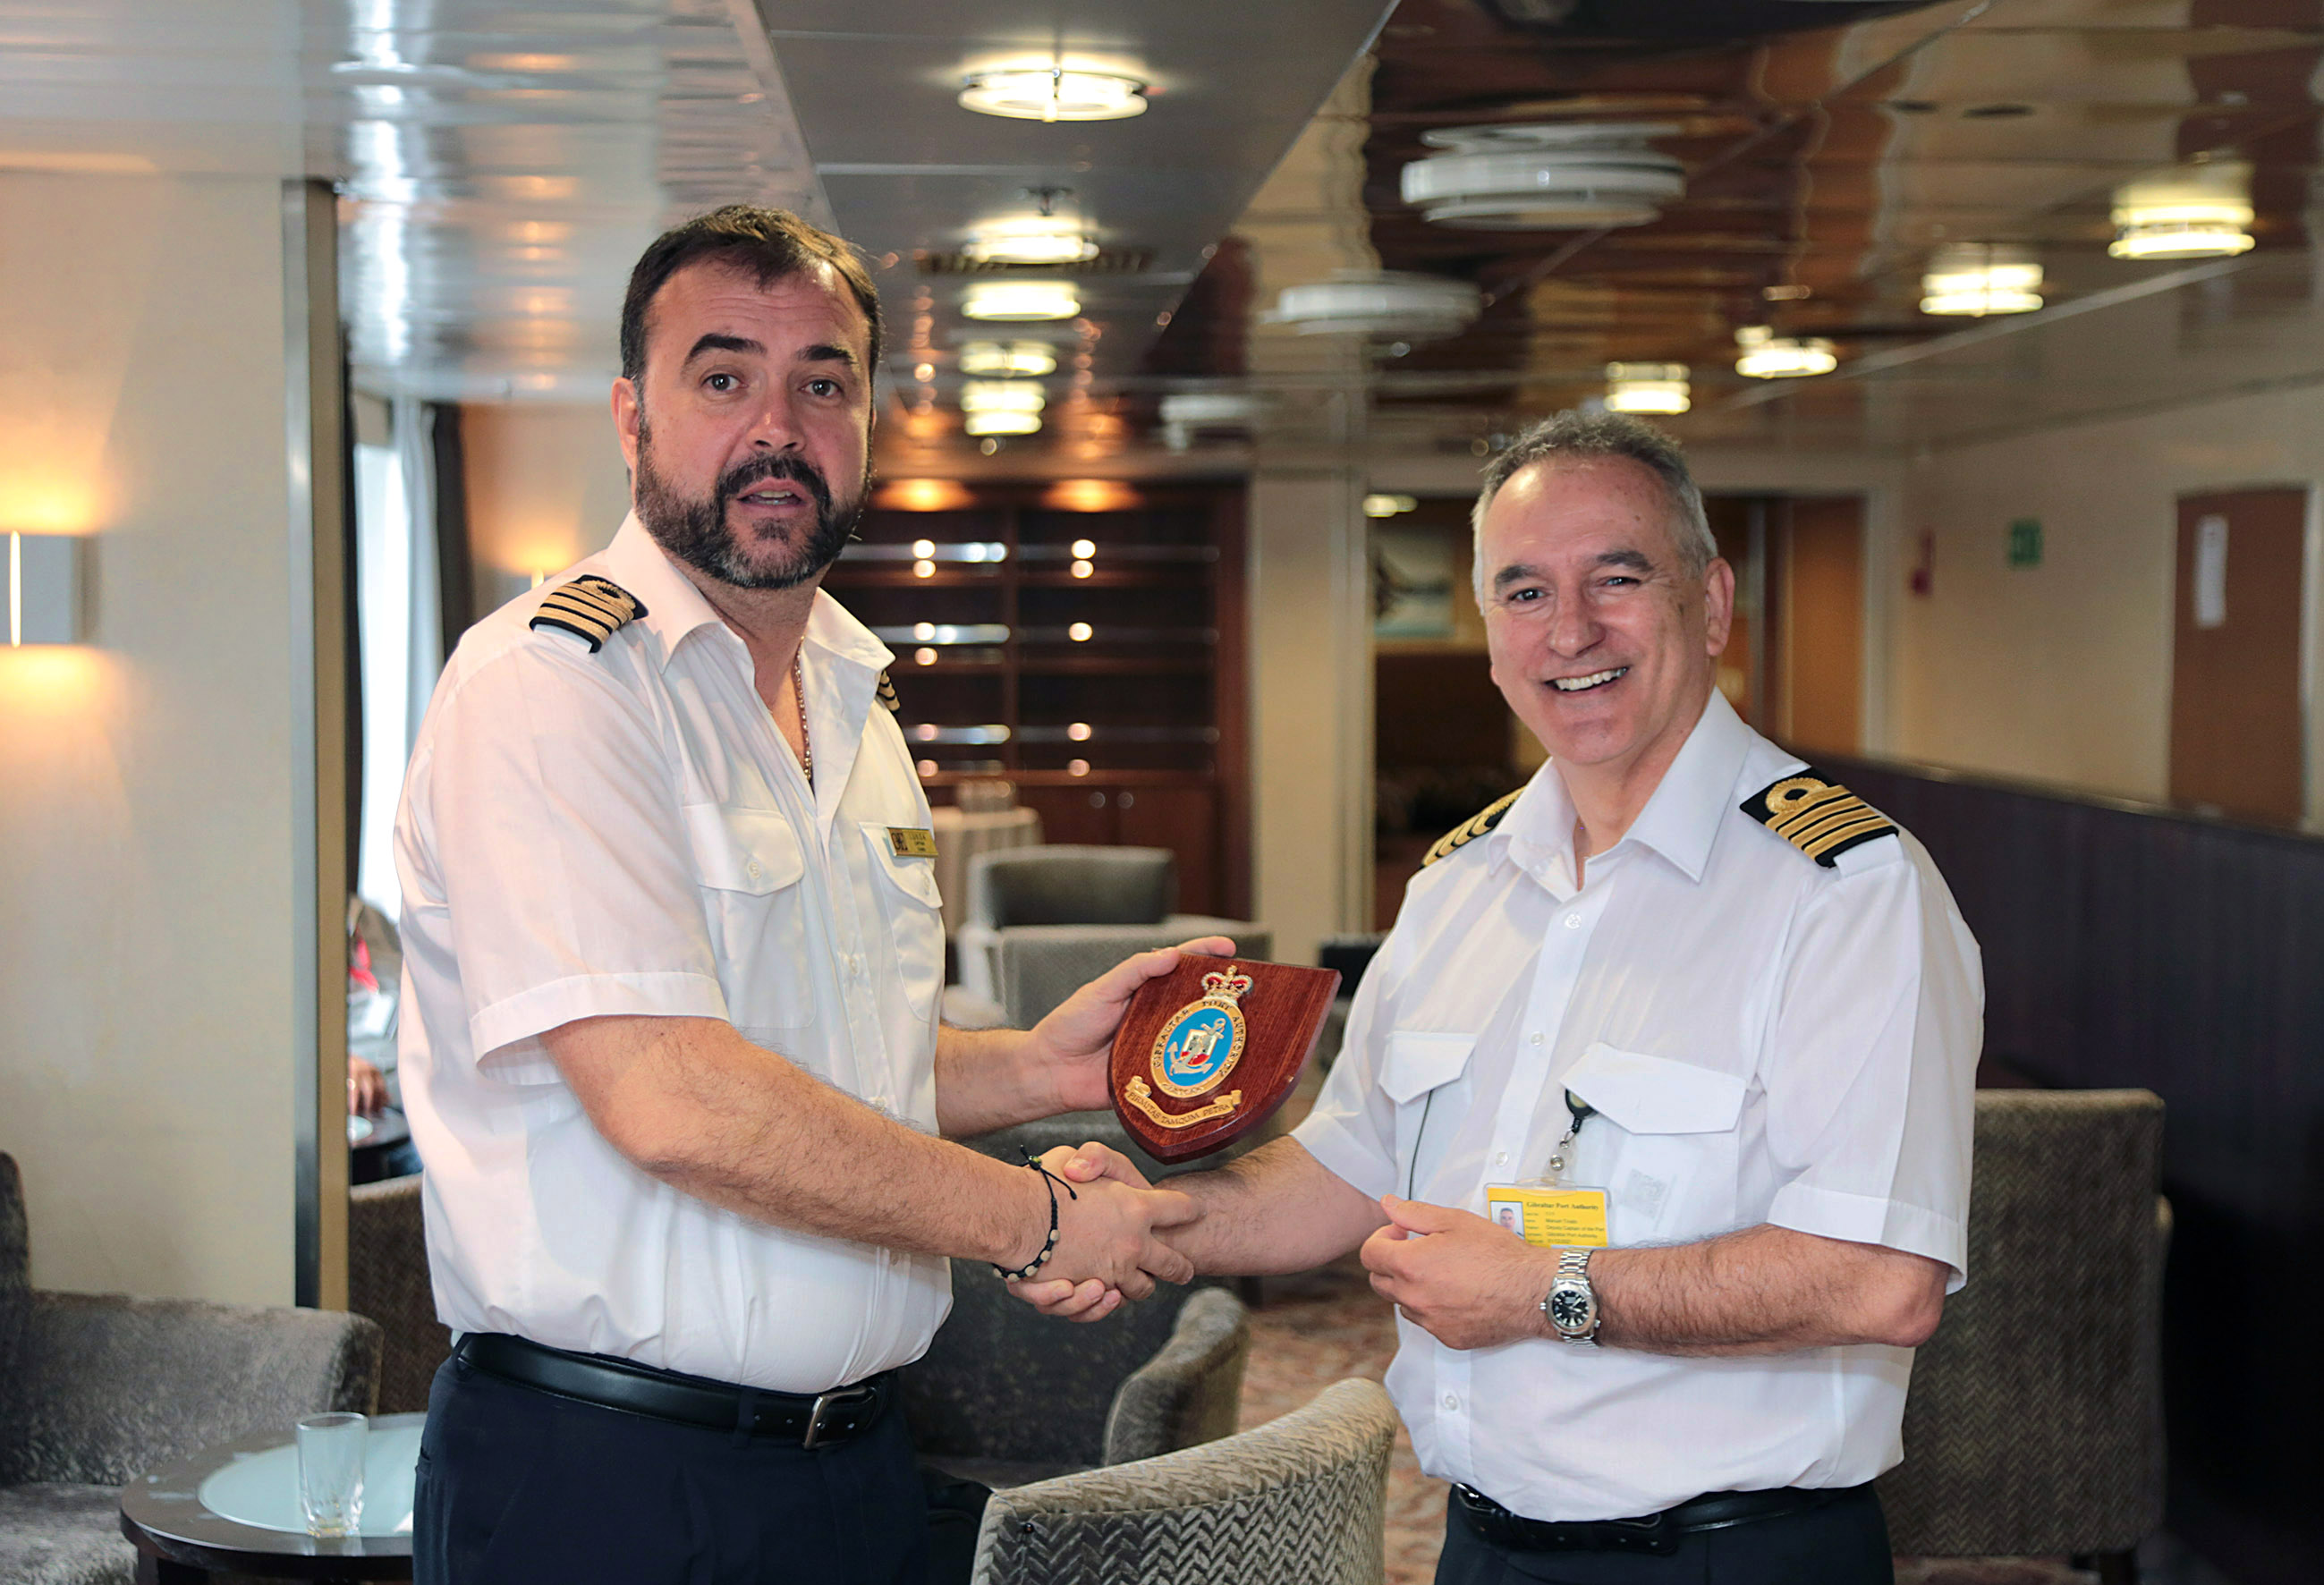 Captain Luksa Plecas with Deputy Captain of the Port, Manolo Tirado,